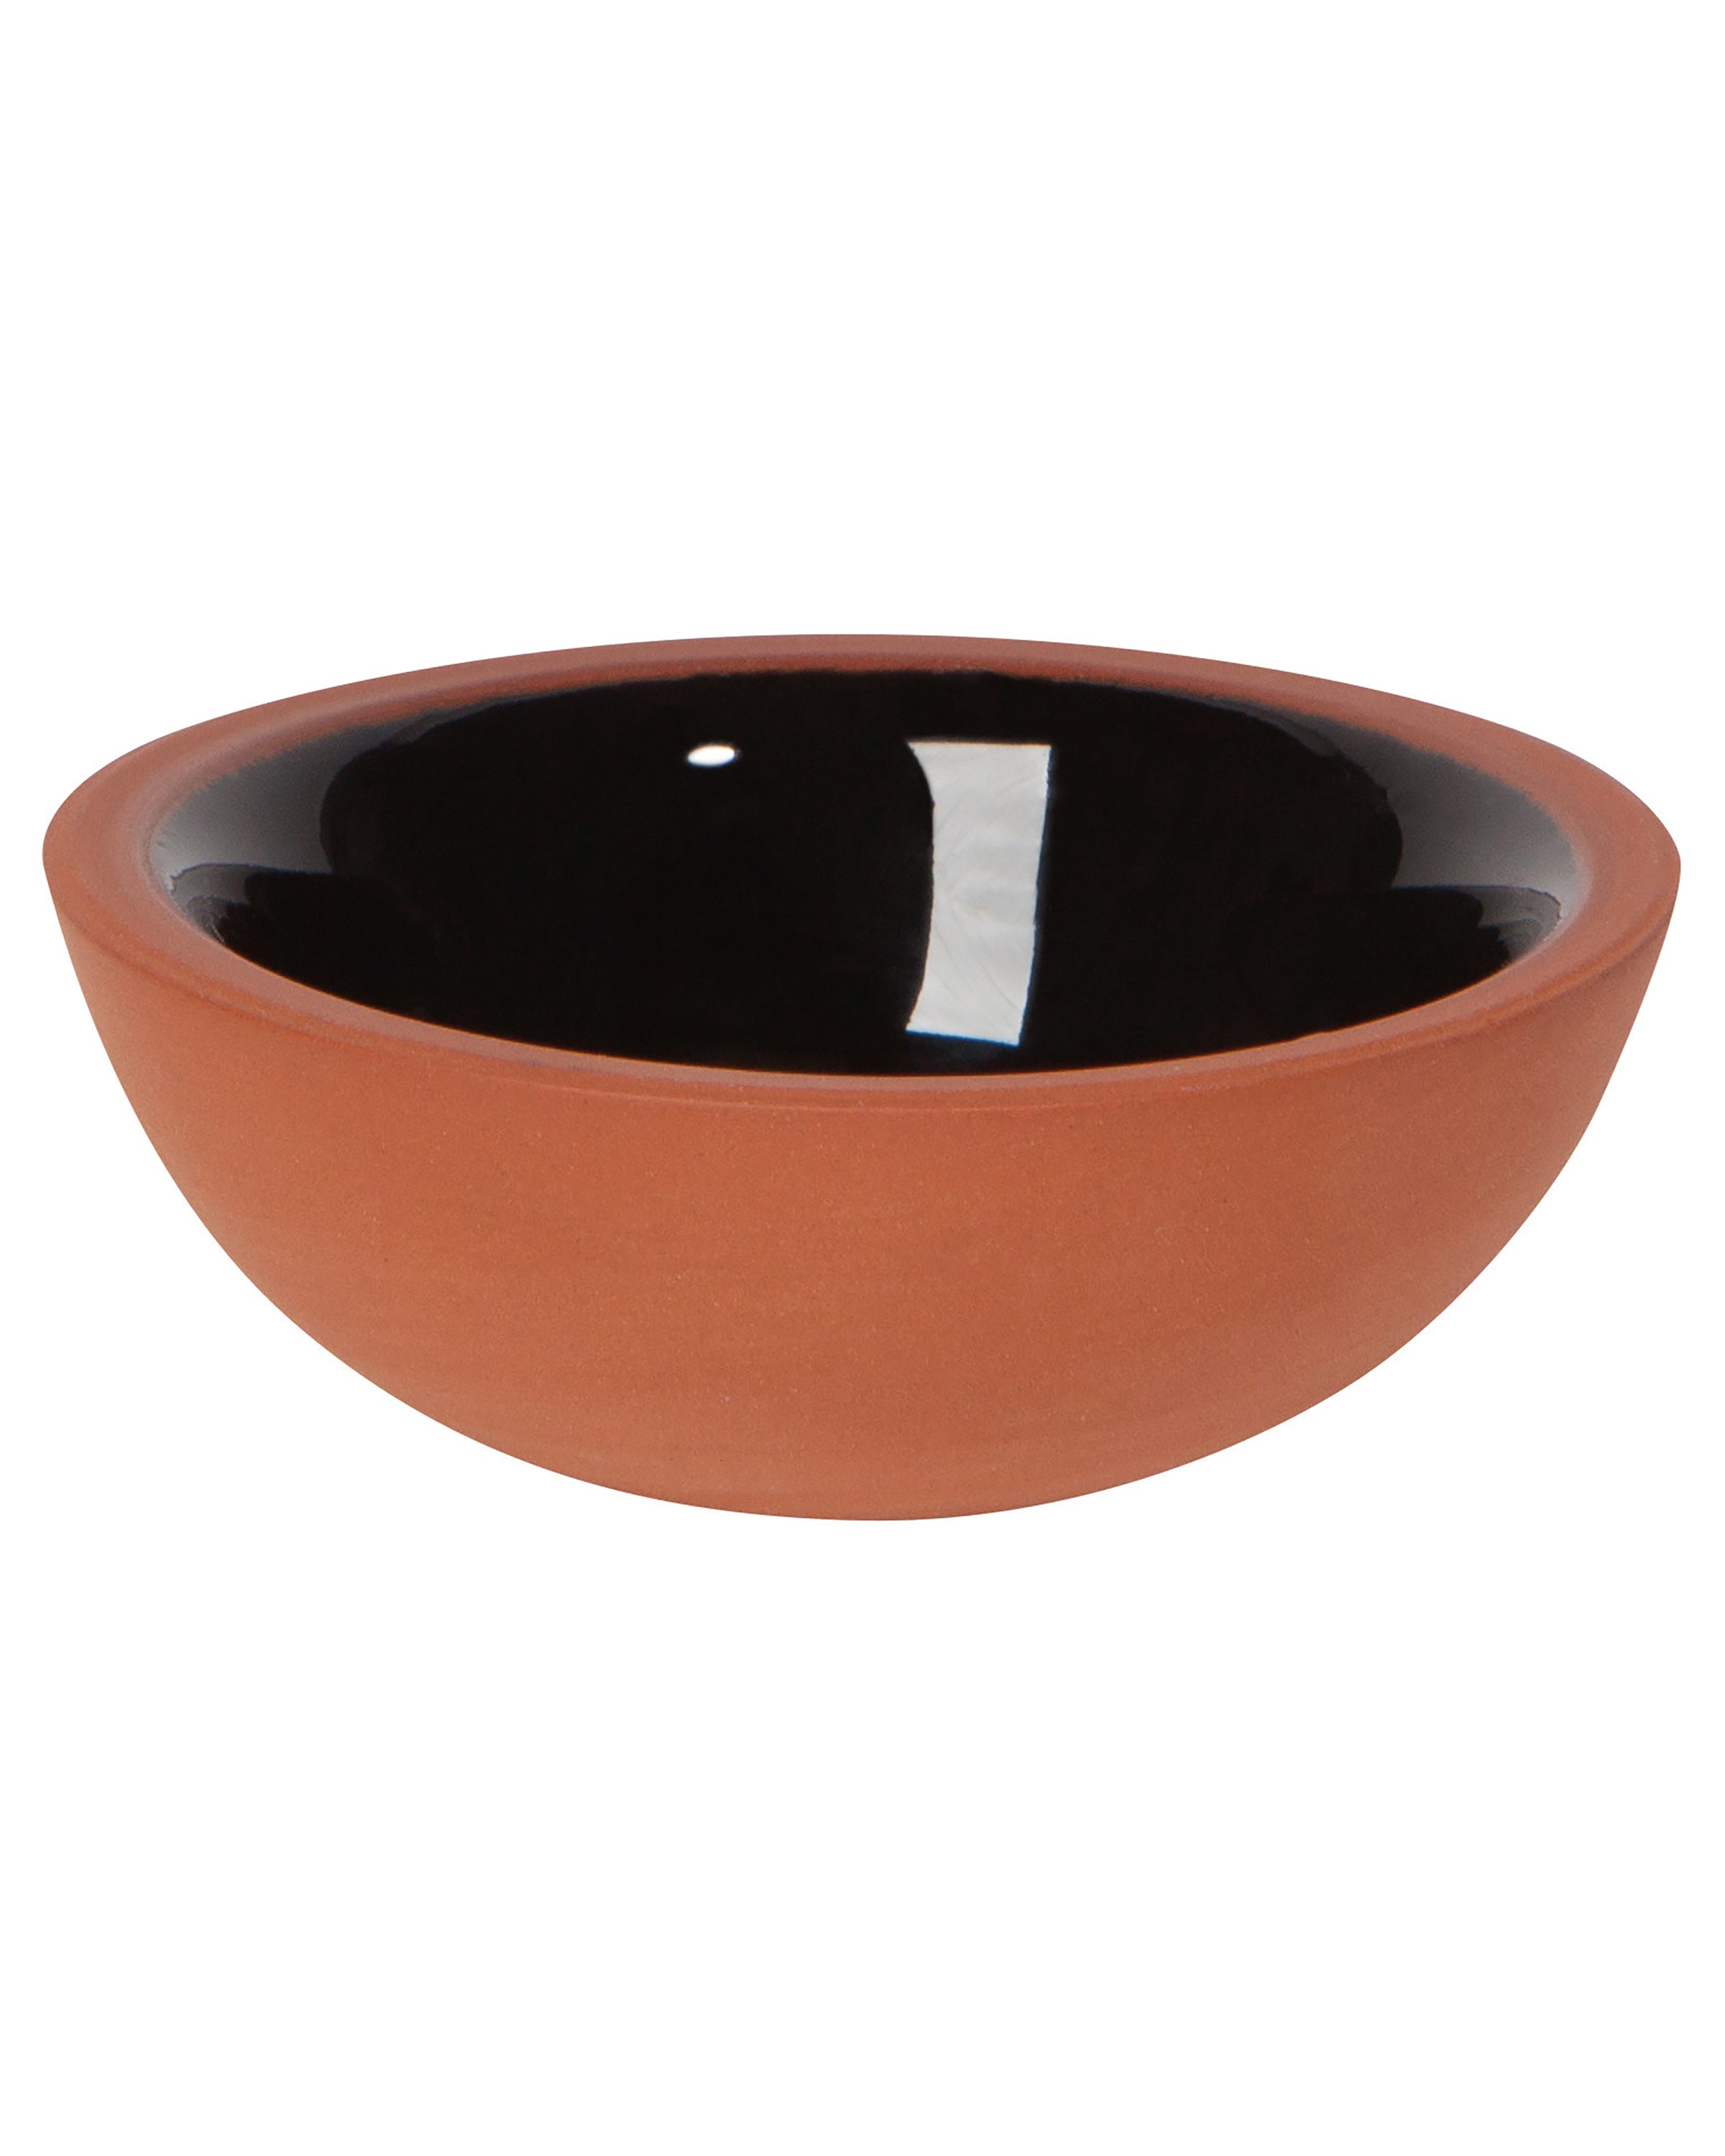 Danica Designs Kaleidoscope Terracotta Pinch Bowls Set of 6